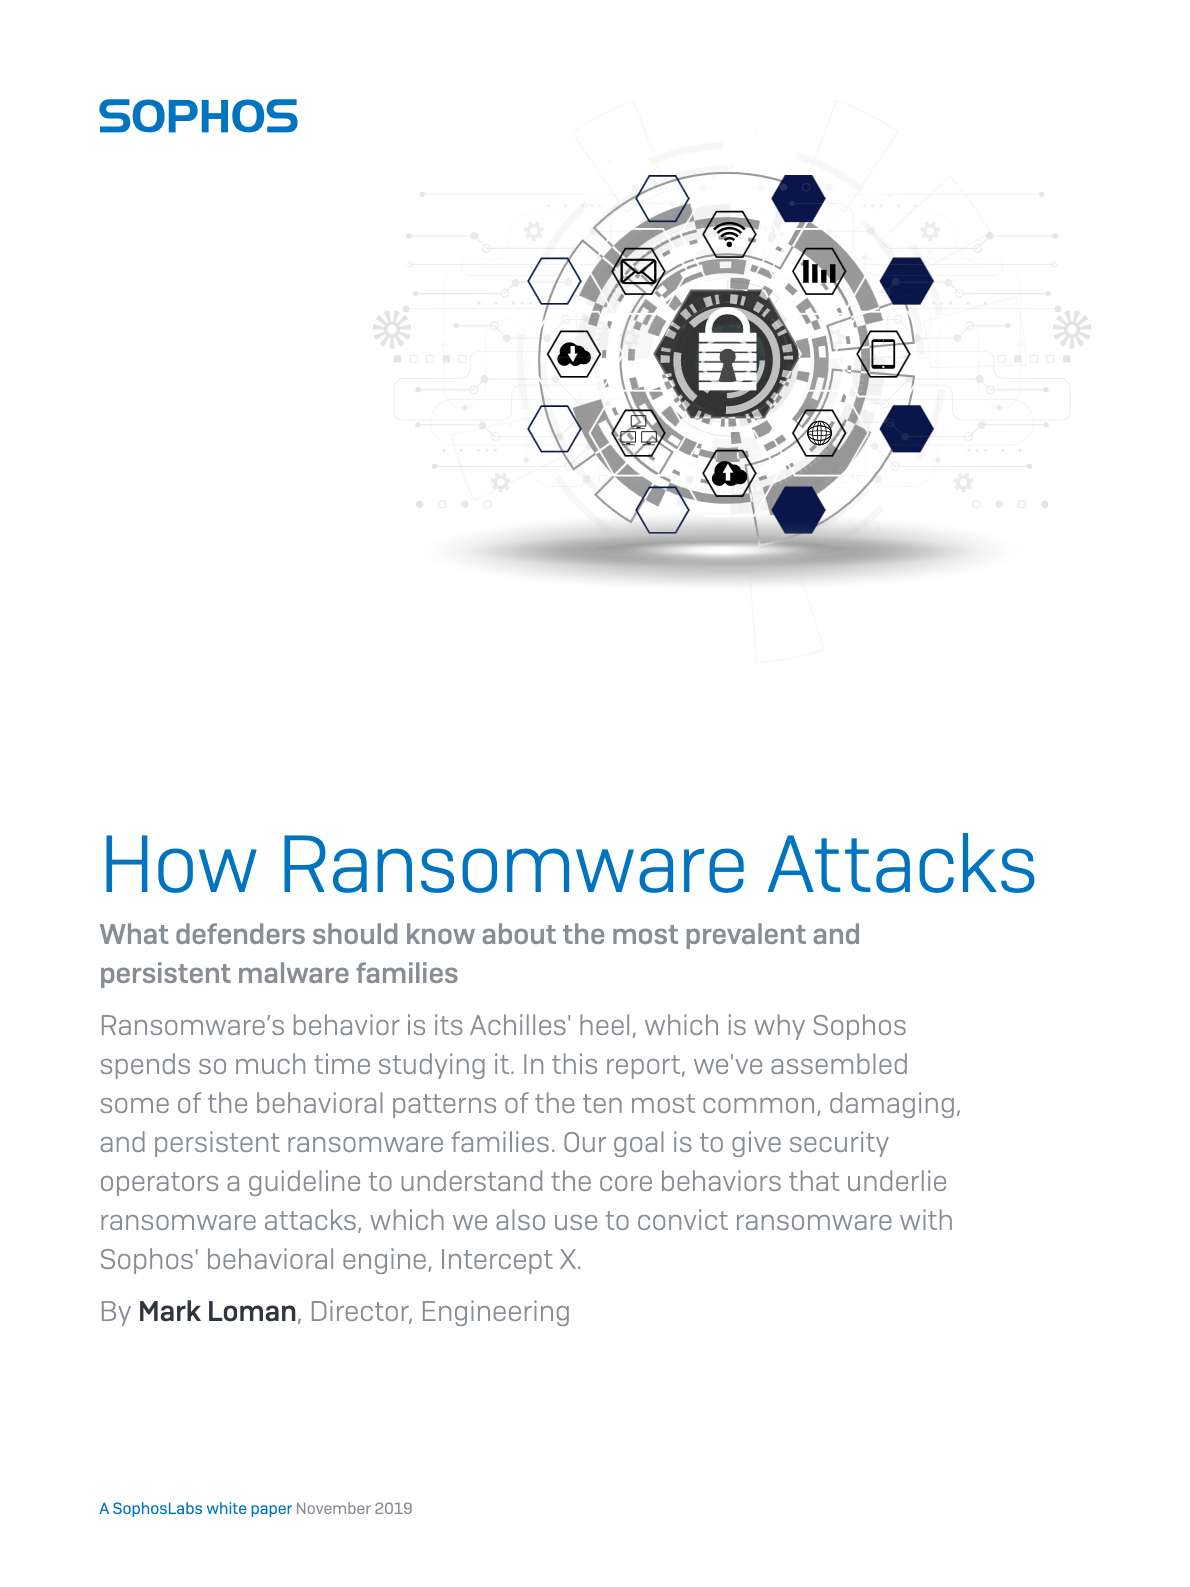 SophosLabs Ransomware Behavior Report